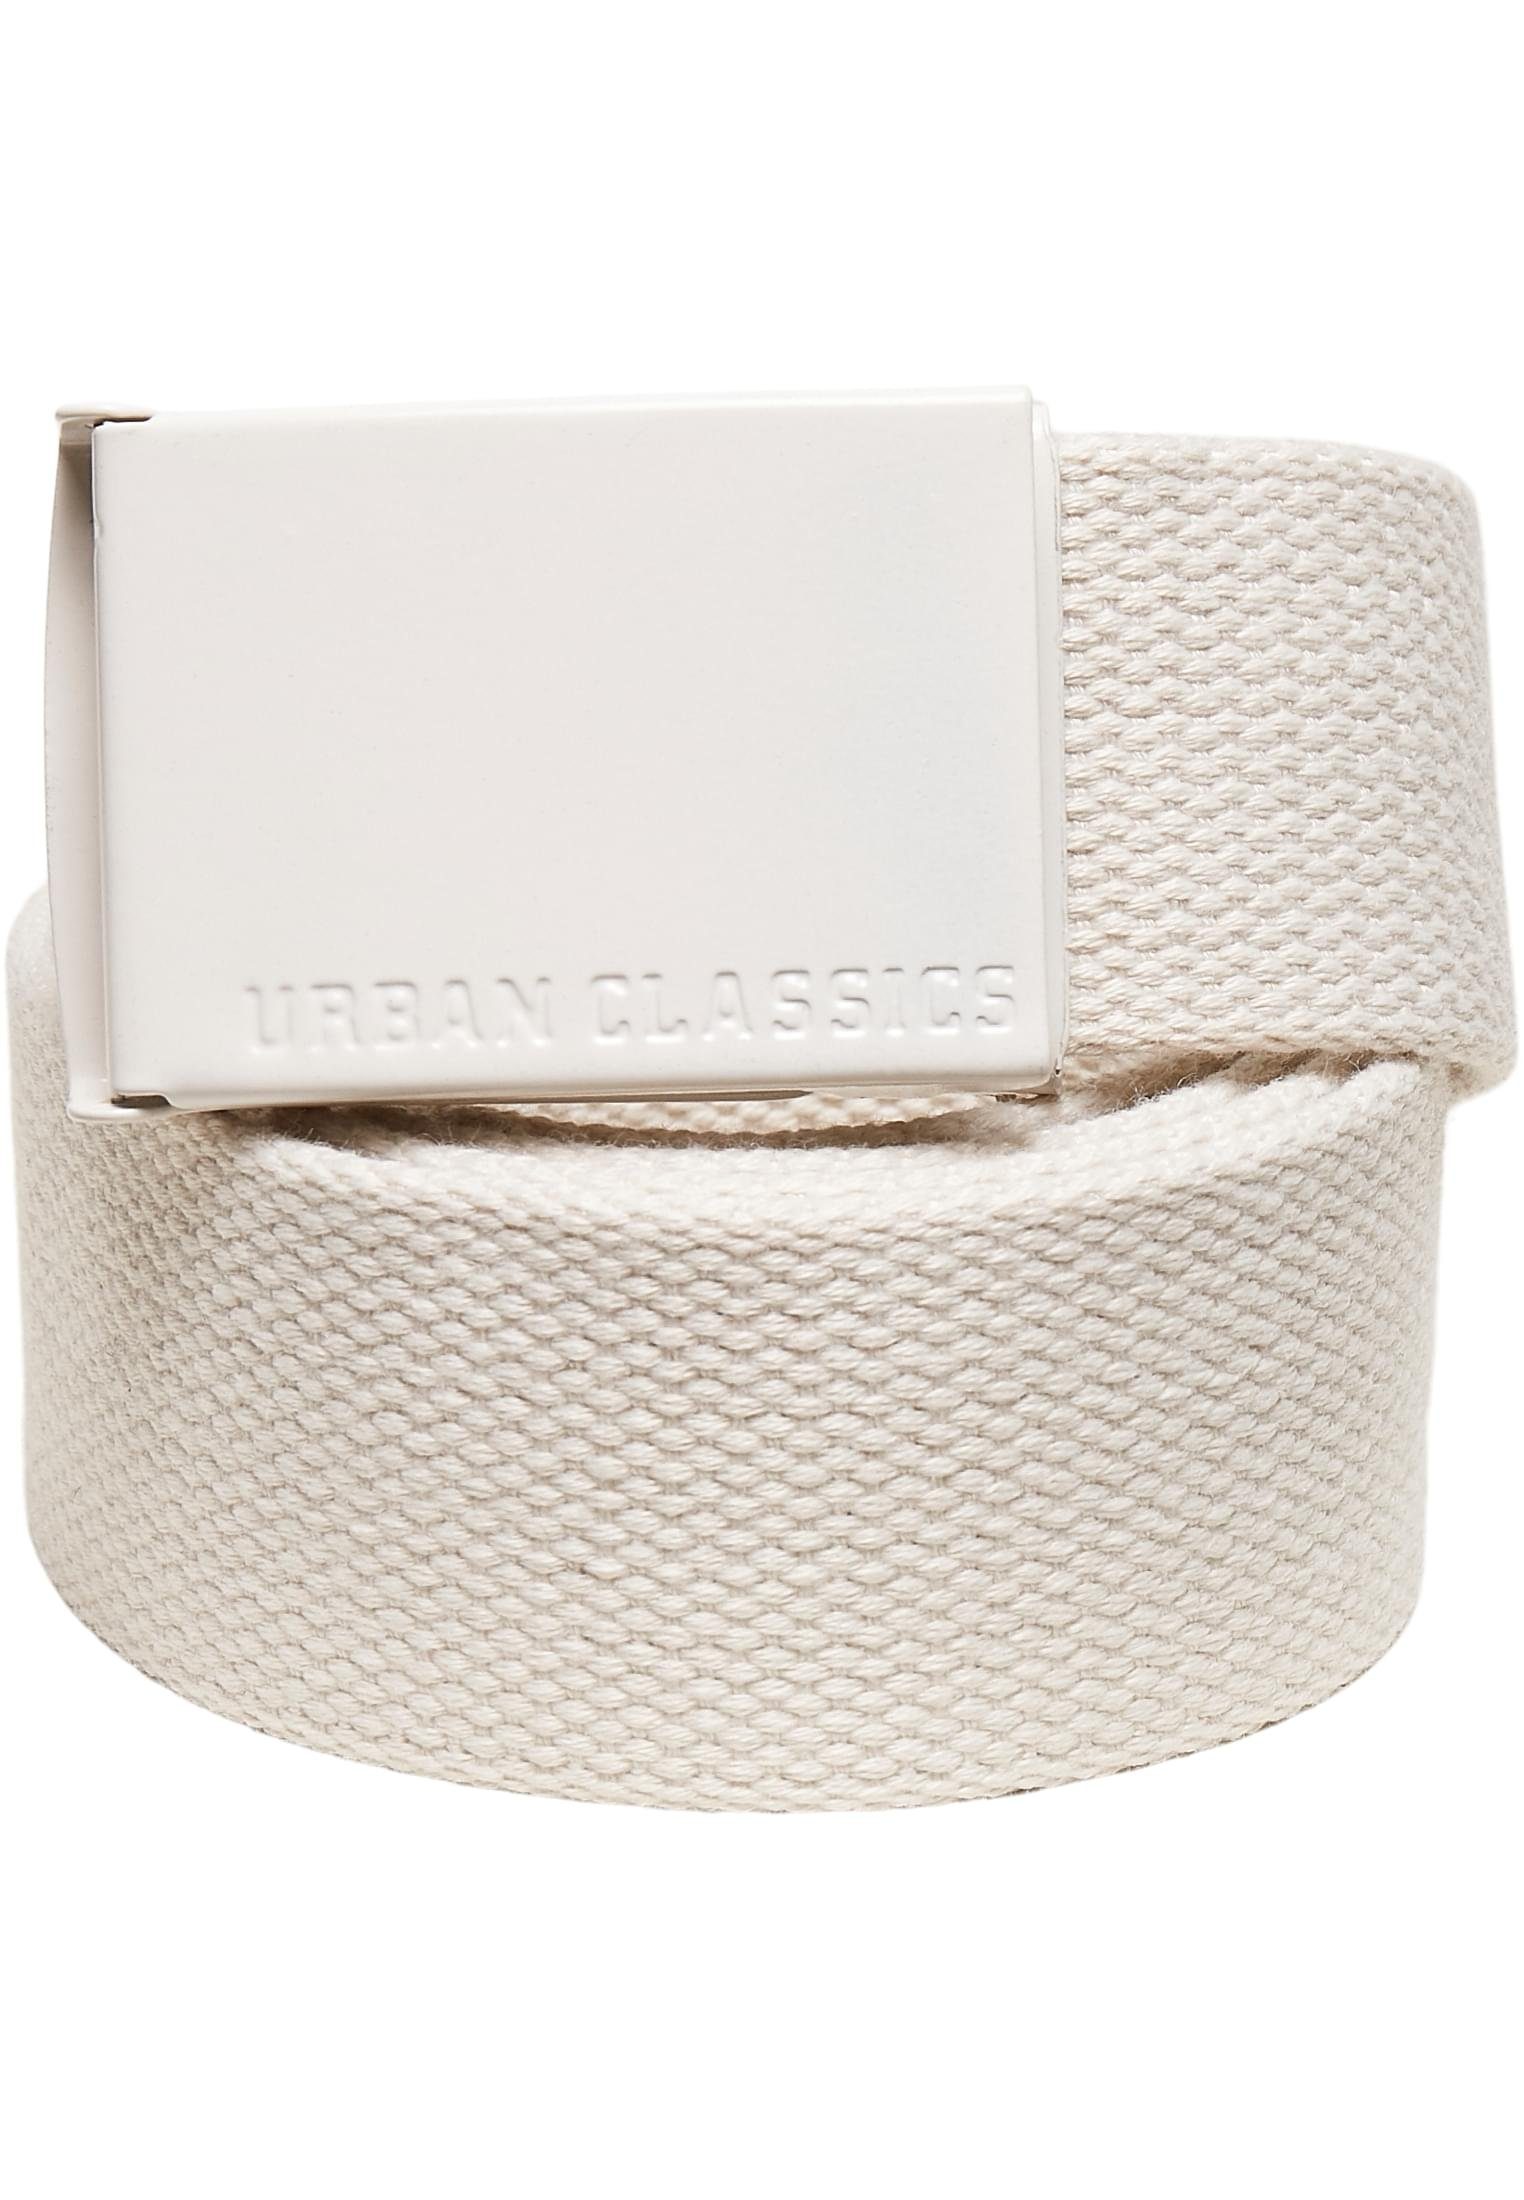 URBAN CLASSICS Hüftgürtel Canvas Buckle Accessoires Belt 2-Pack bark-whitesand Colored